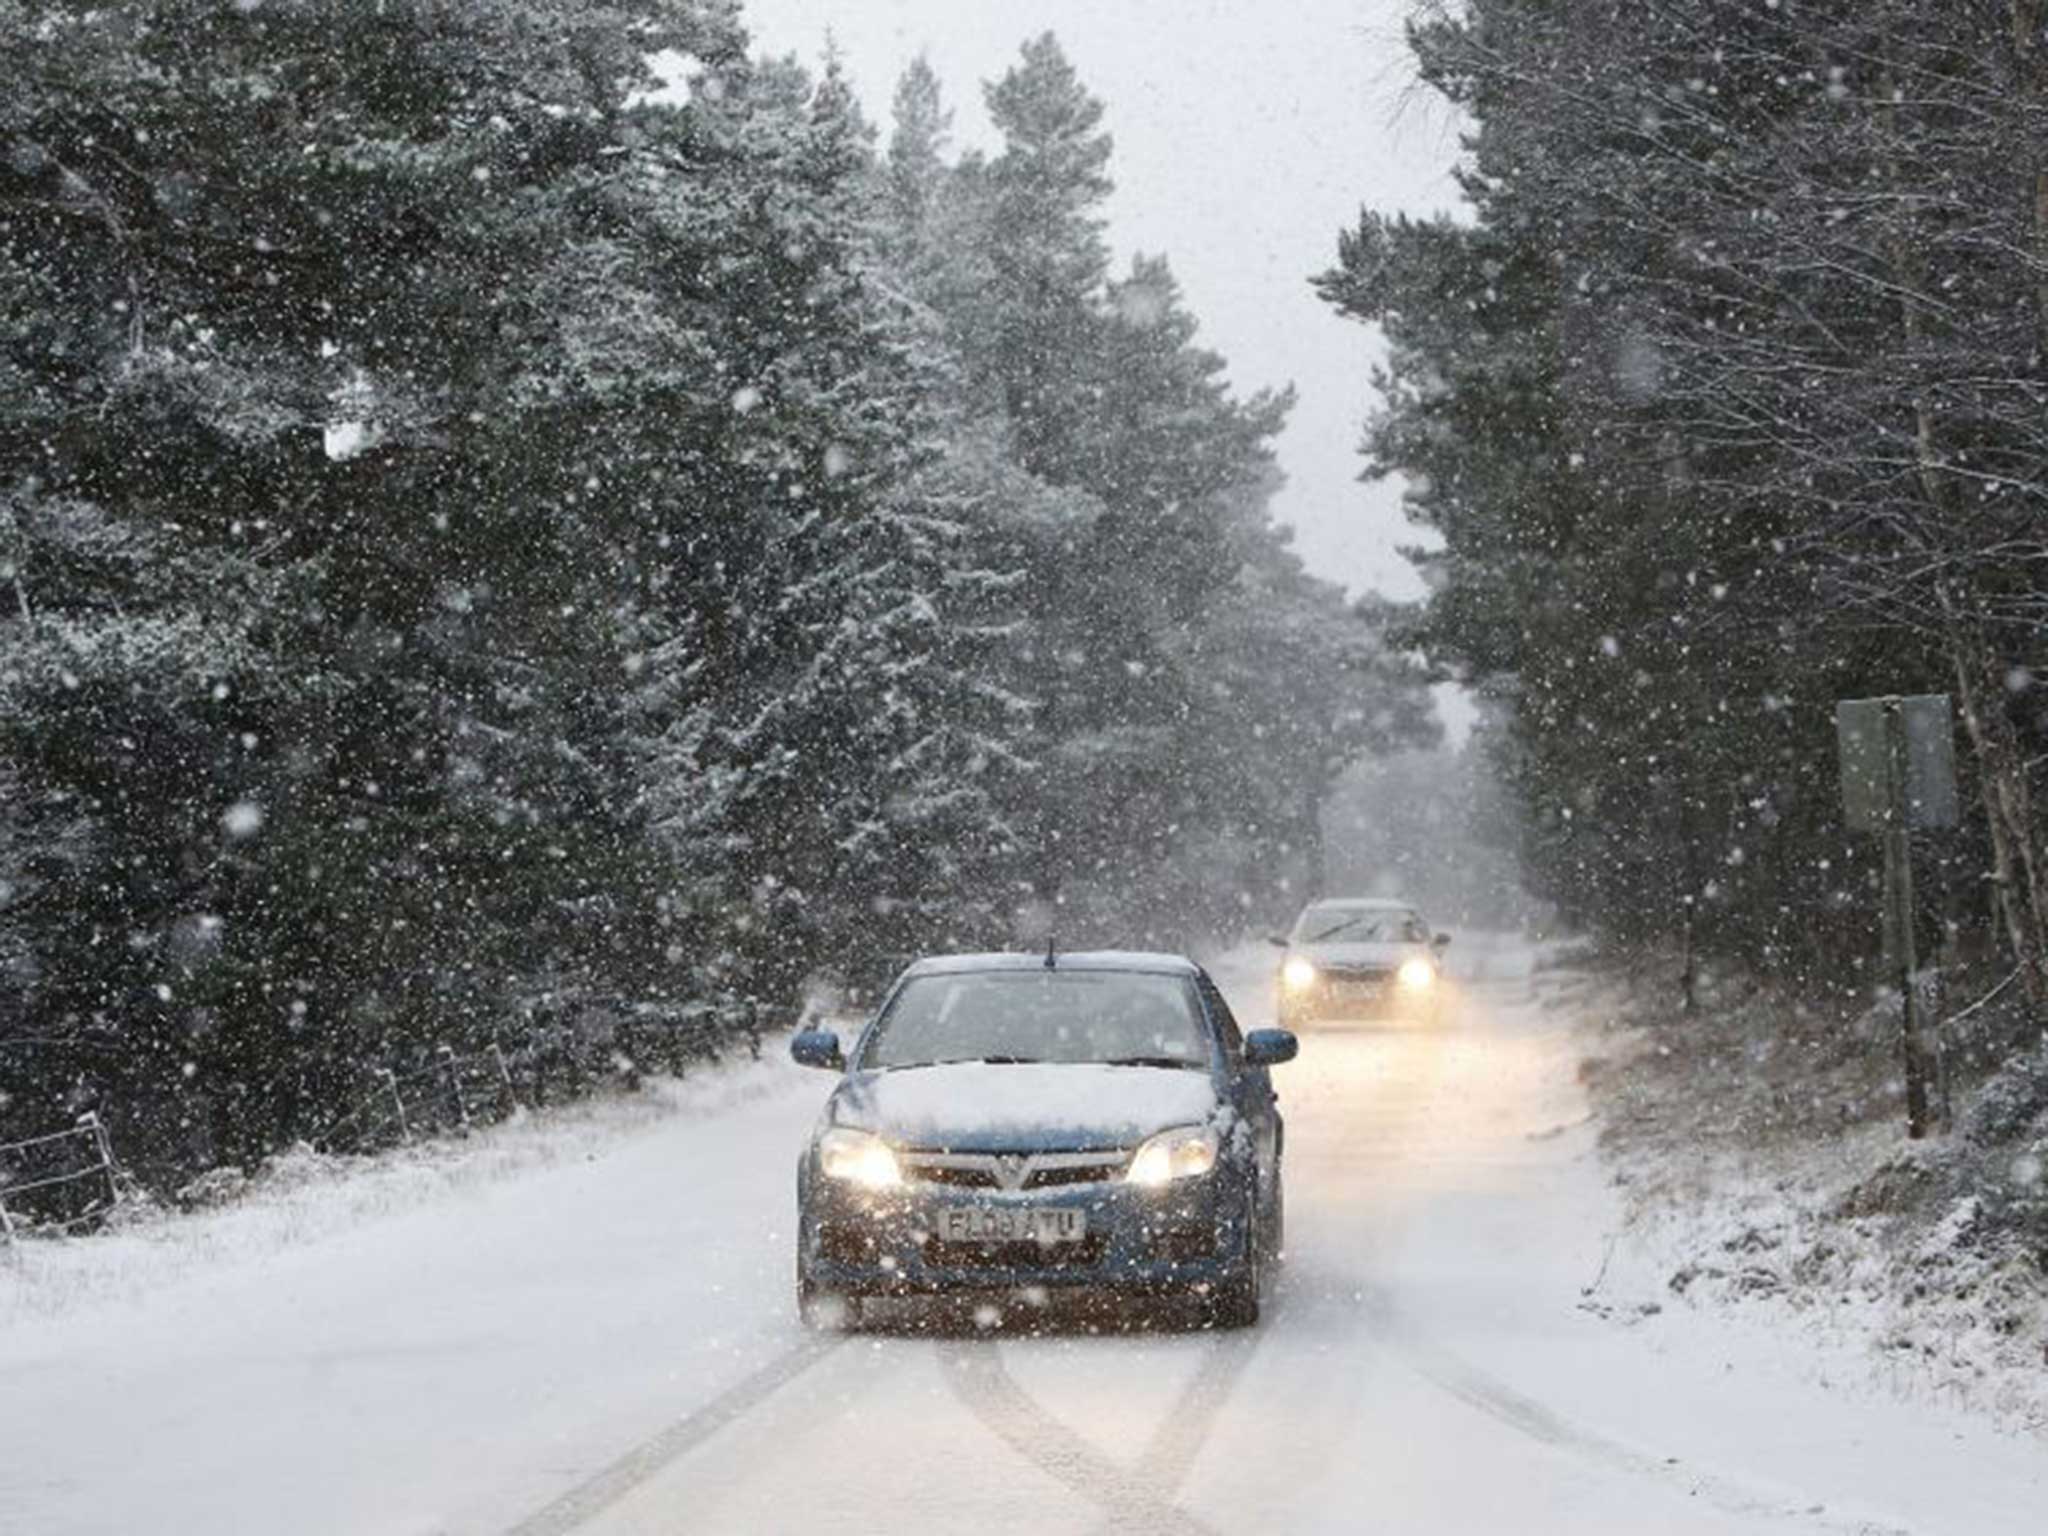 Traffic slows as snow falls on 27th December last year